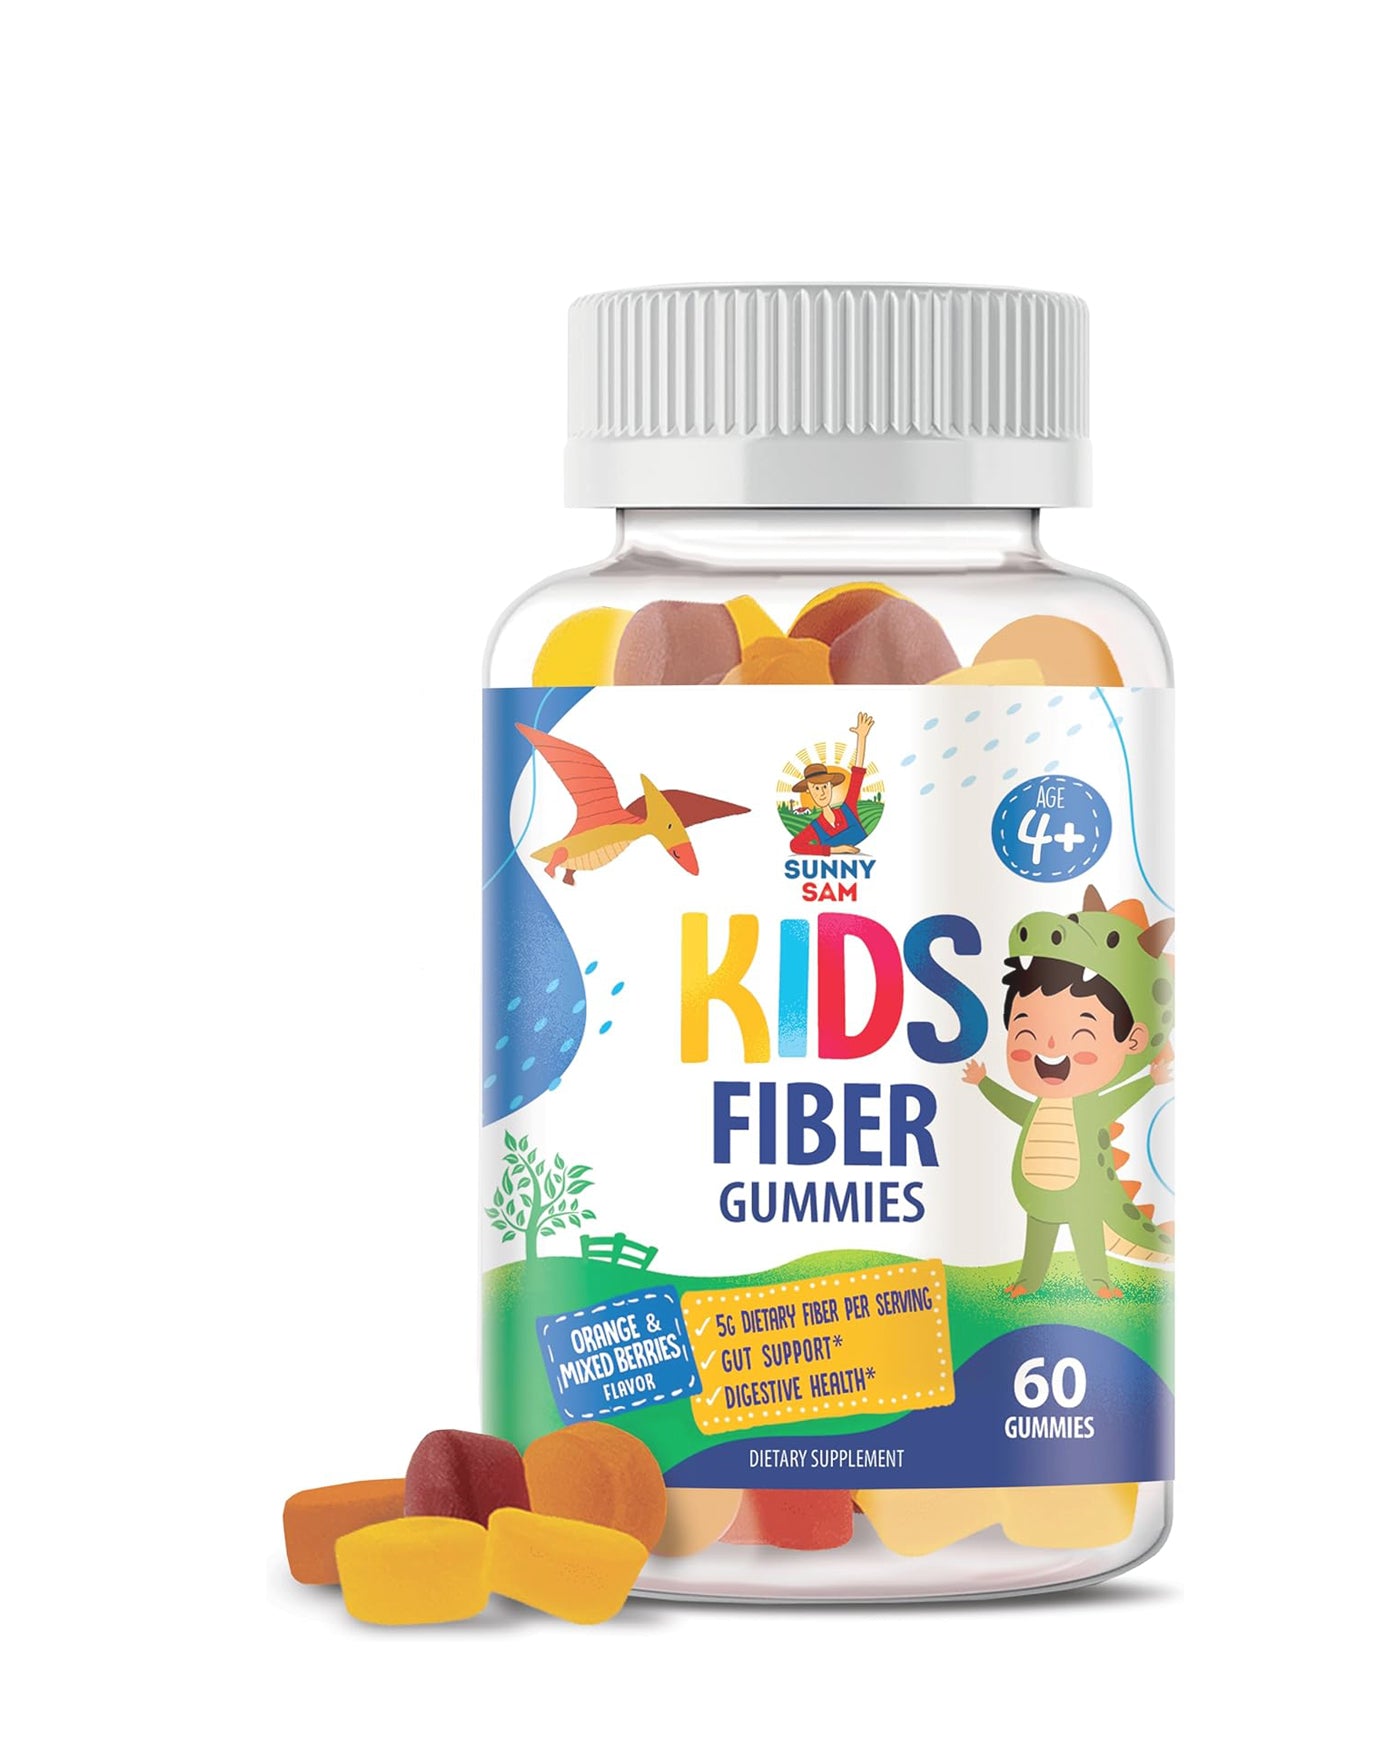 Fiber Gummies for Kids & Adults - Fiber Chewable Immunity Gummy